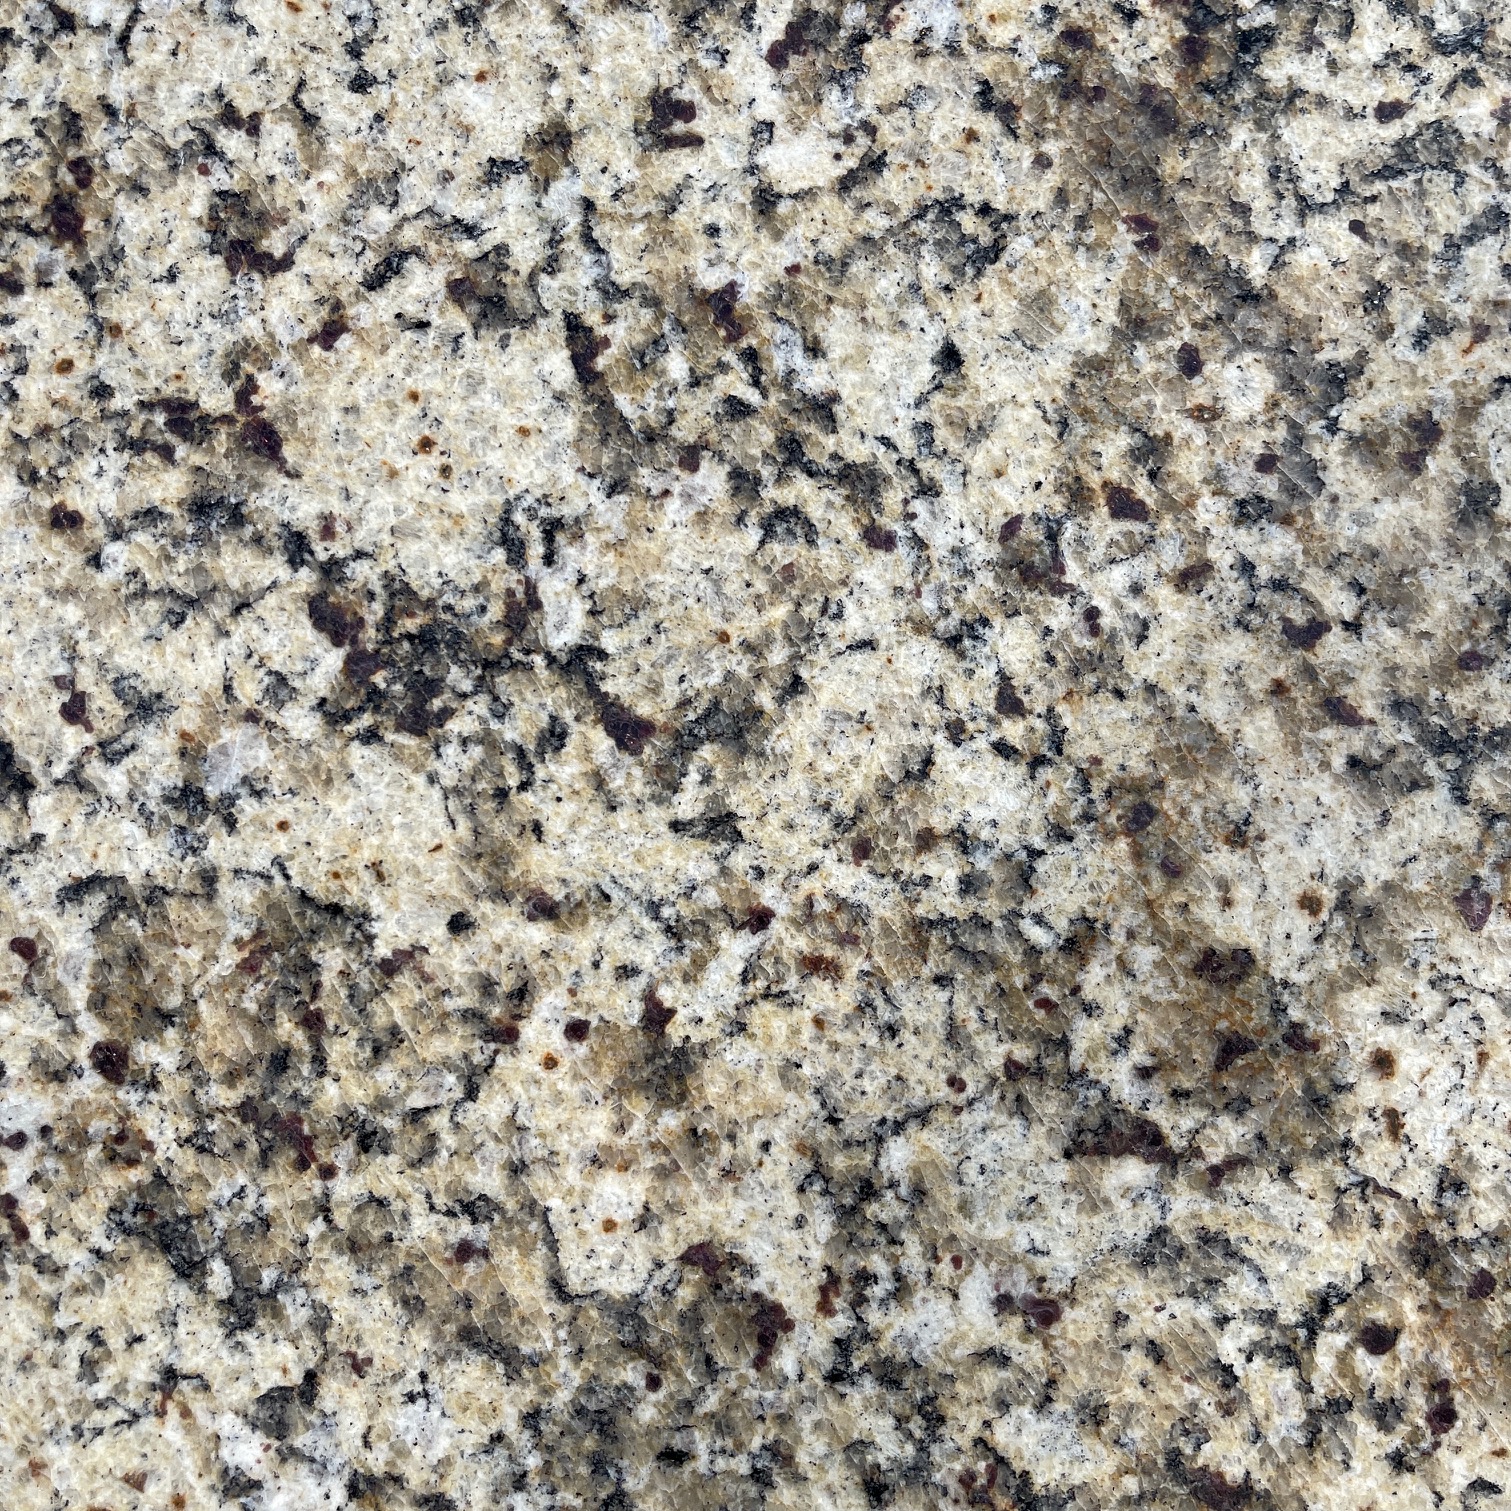 Granite Countertops & Surface Slabs in Wetumpka AL